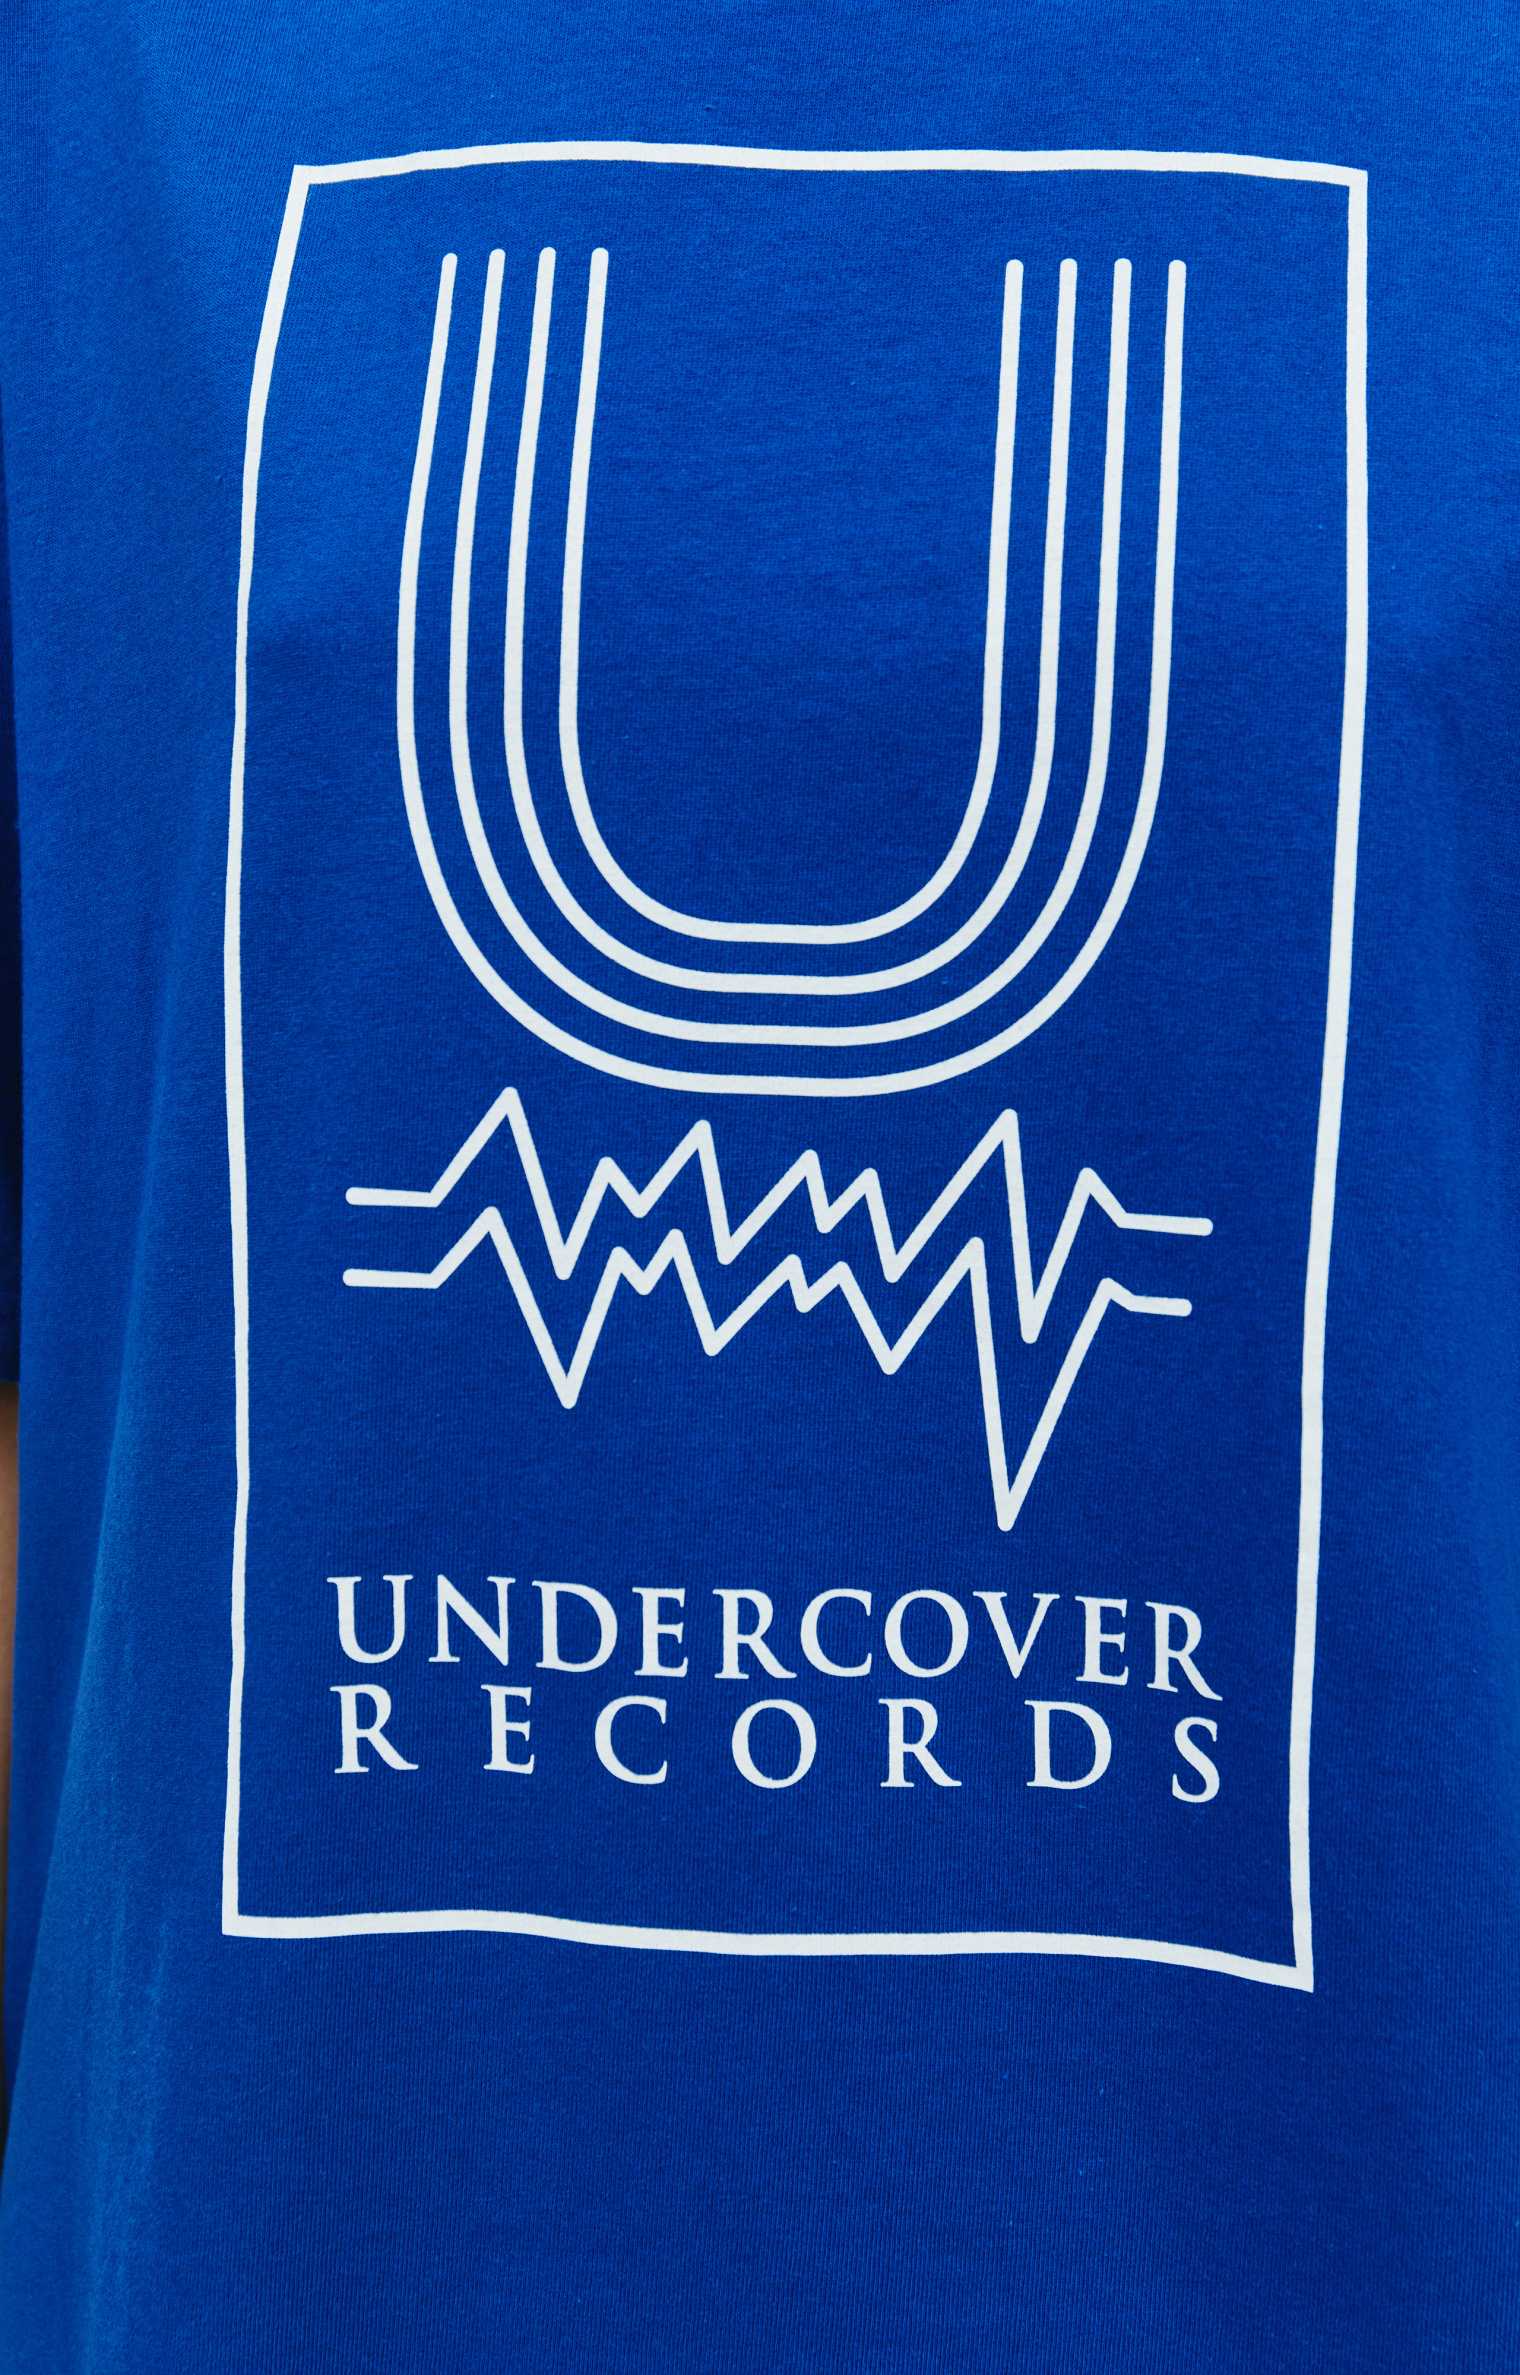 Undercover Синяя футболка Undercover Records